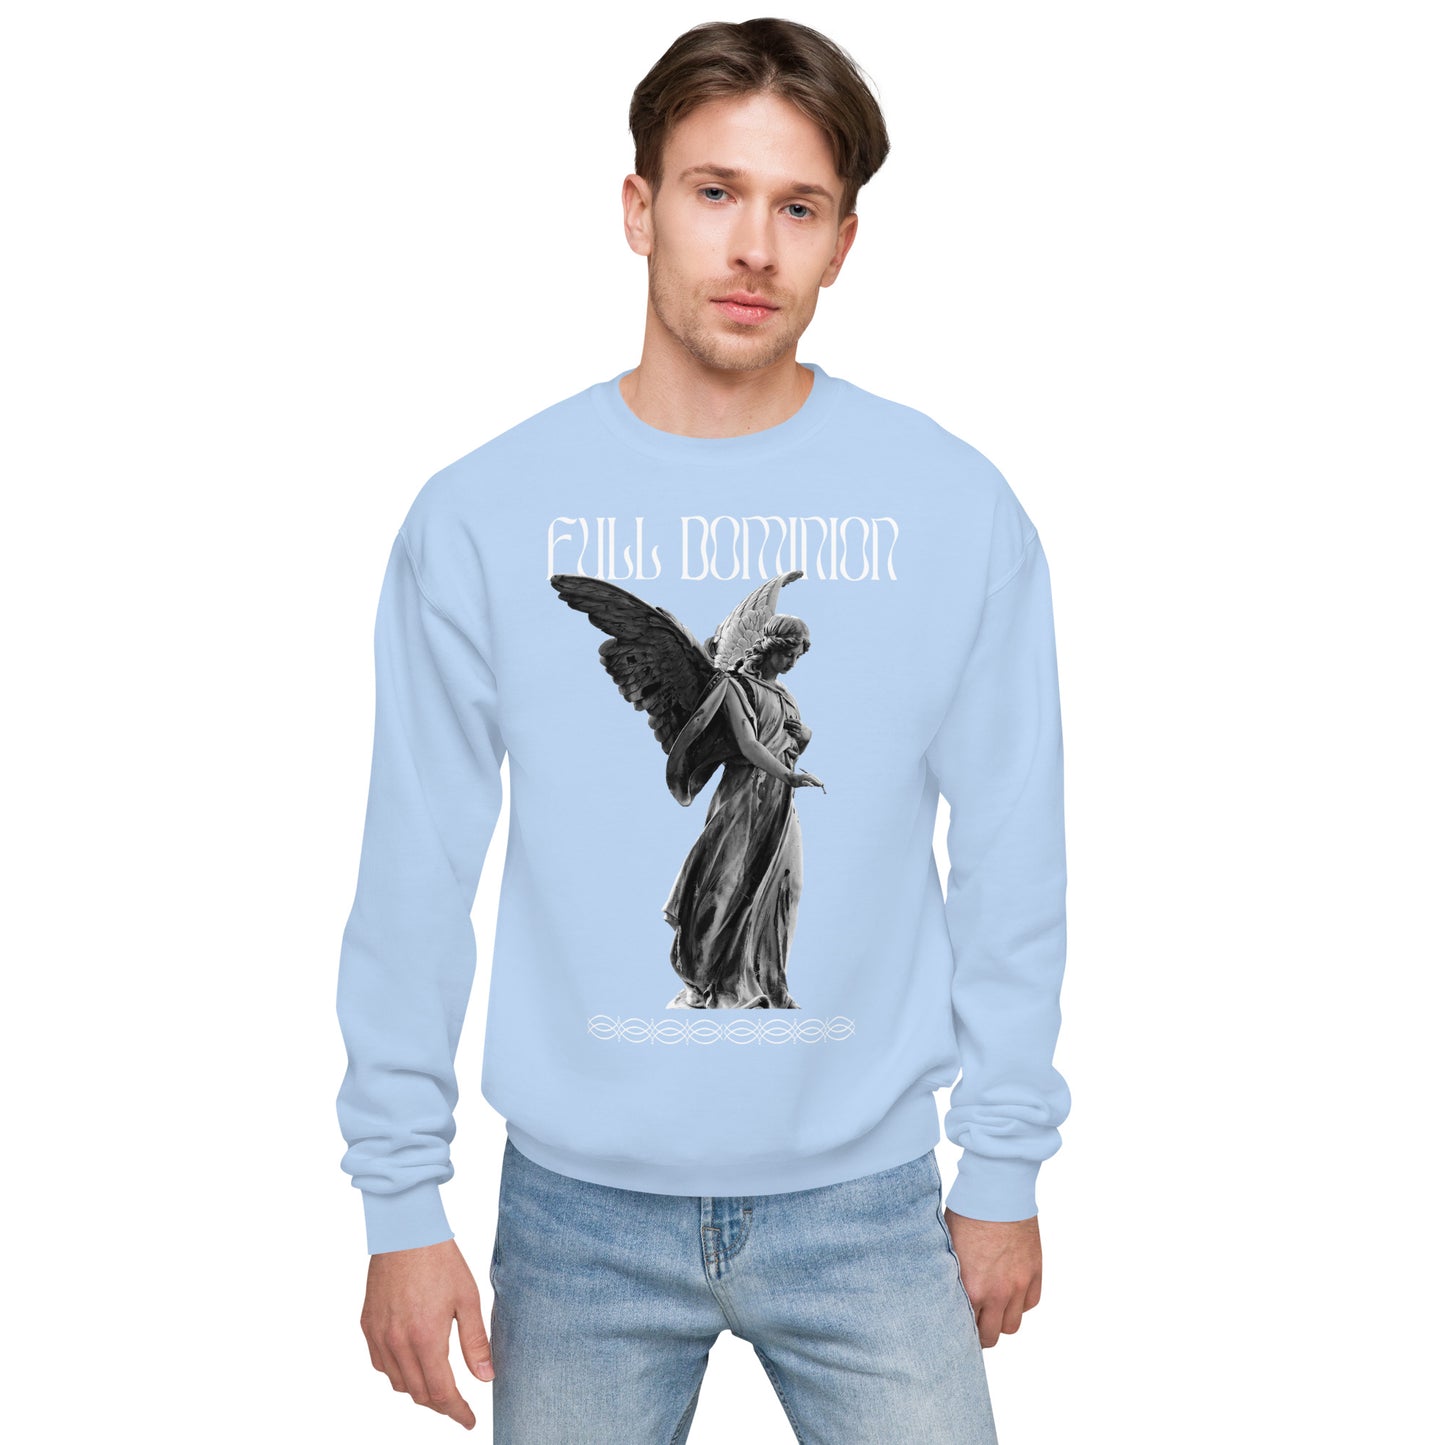 Dominion fleece sweatshirt